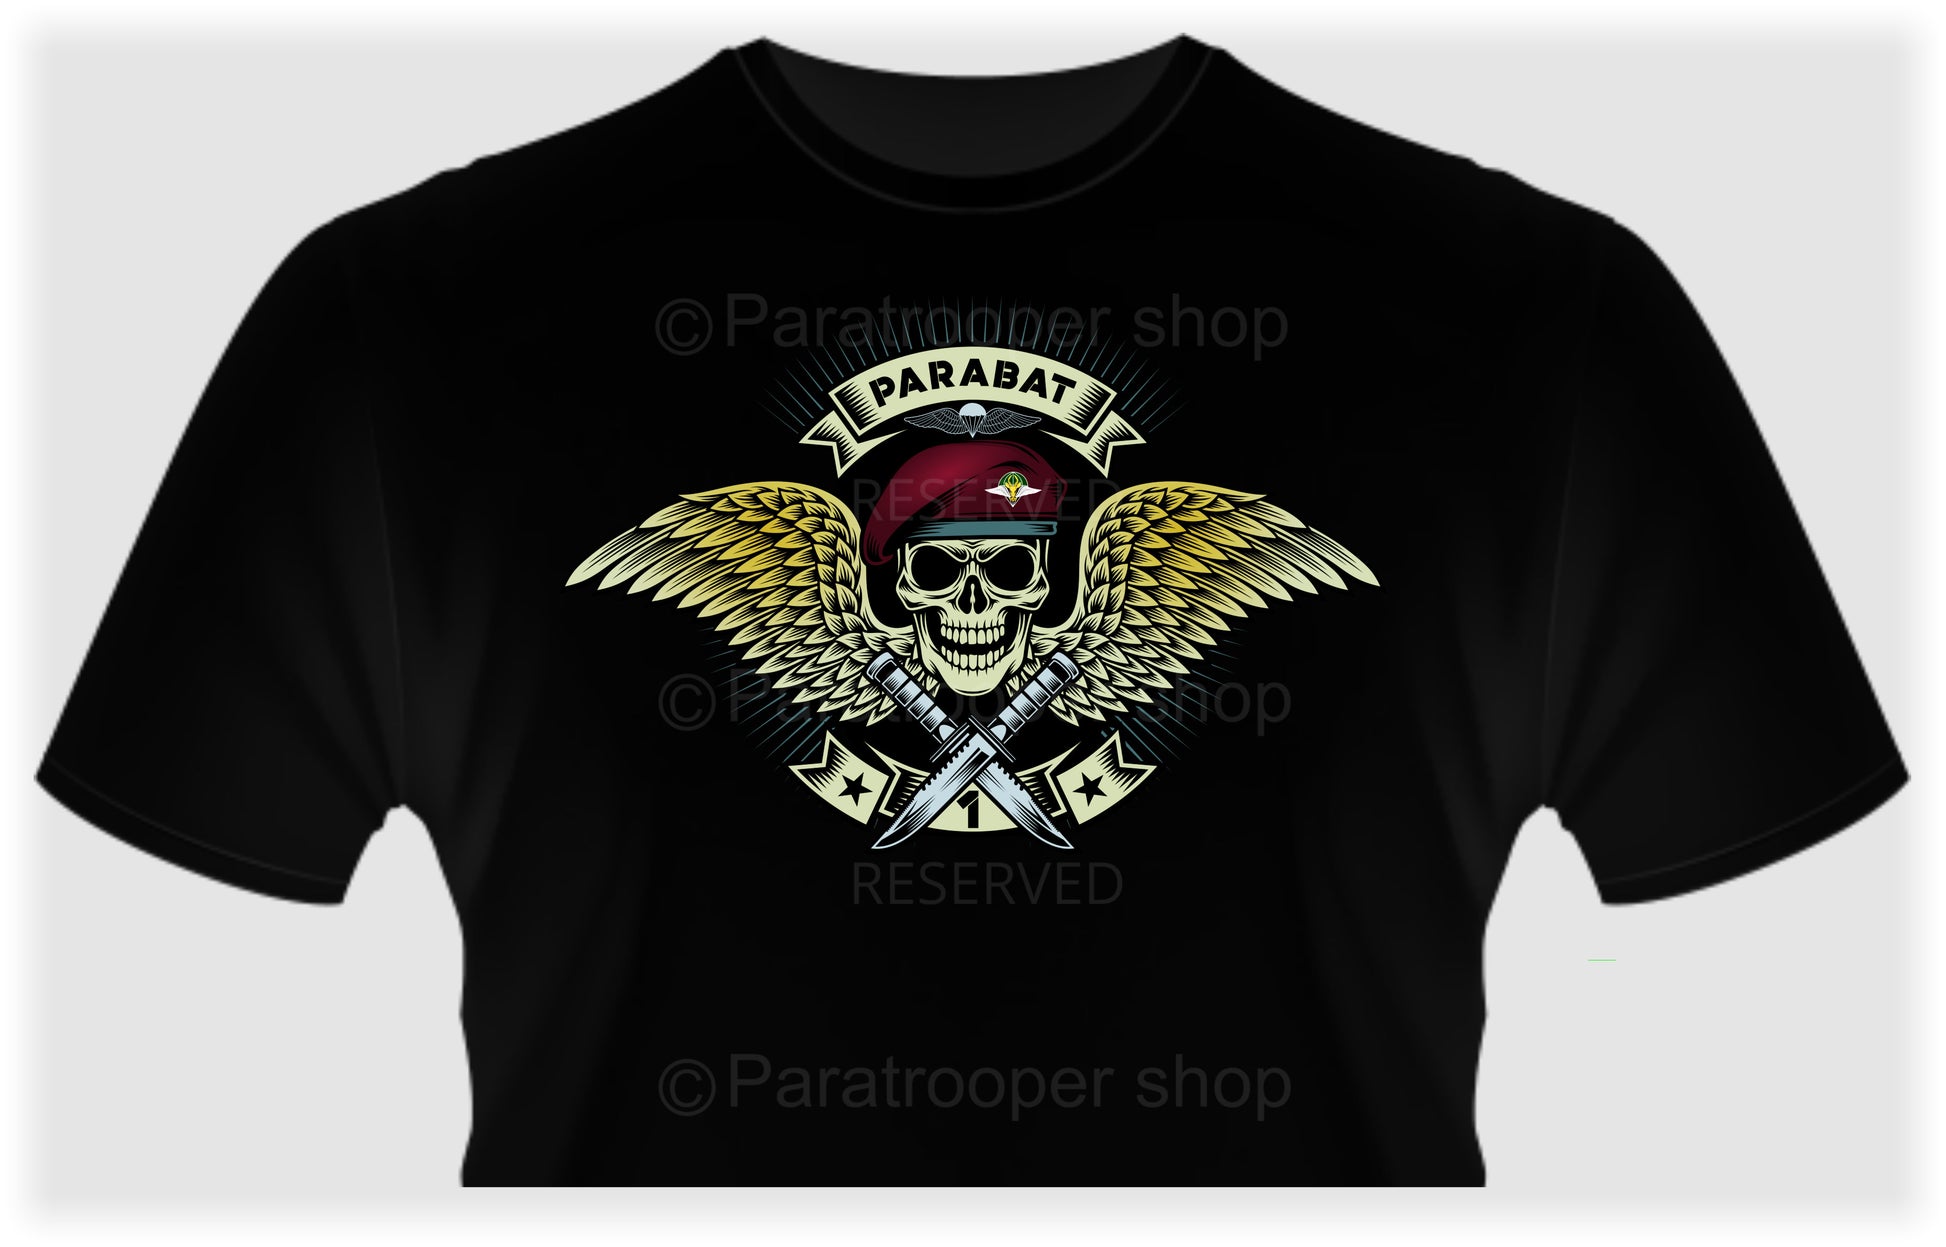 PARABAT Tee - Custom TEE-94 Paratrooper Shop